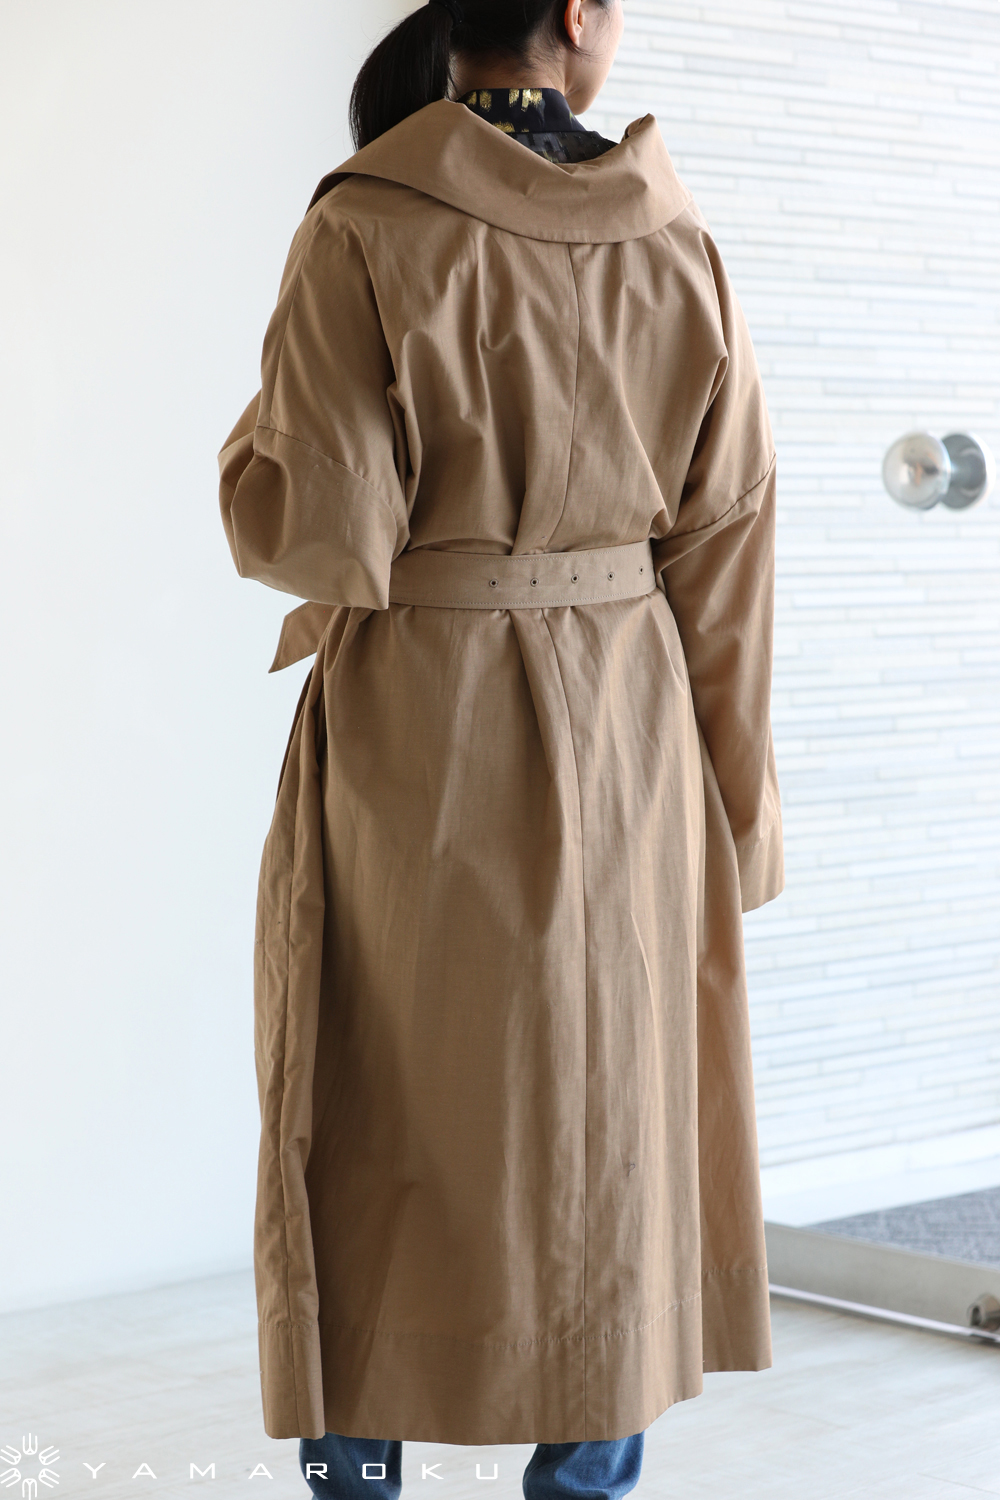 Mame Kurogouchi(マメ) Cotton Hemp Coat！！ | YAMAROKU New Arrival